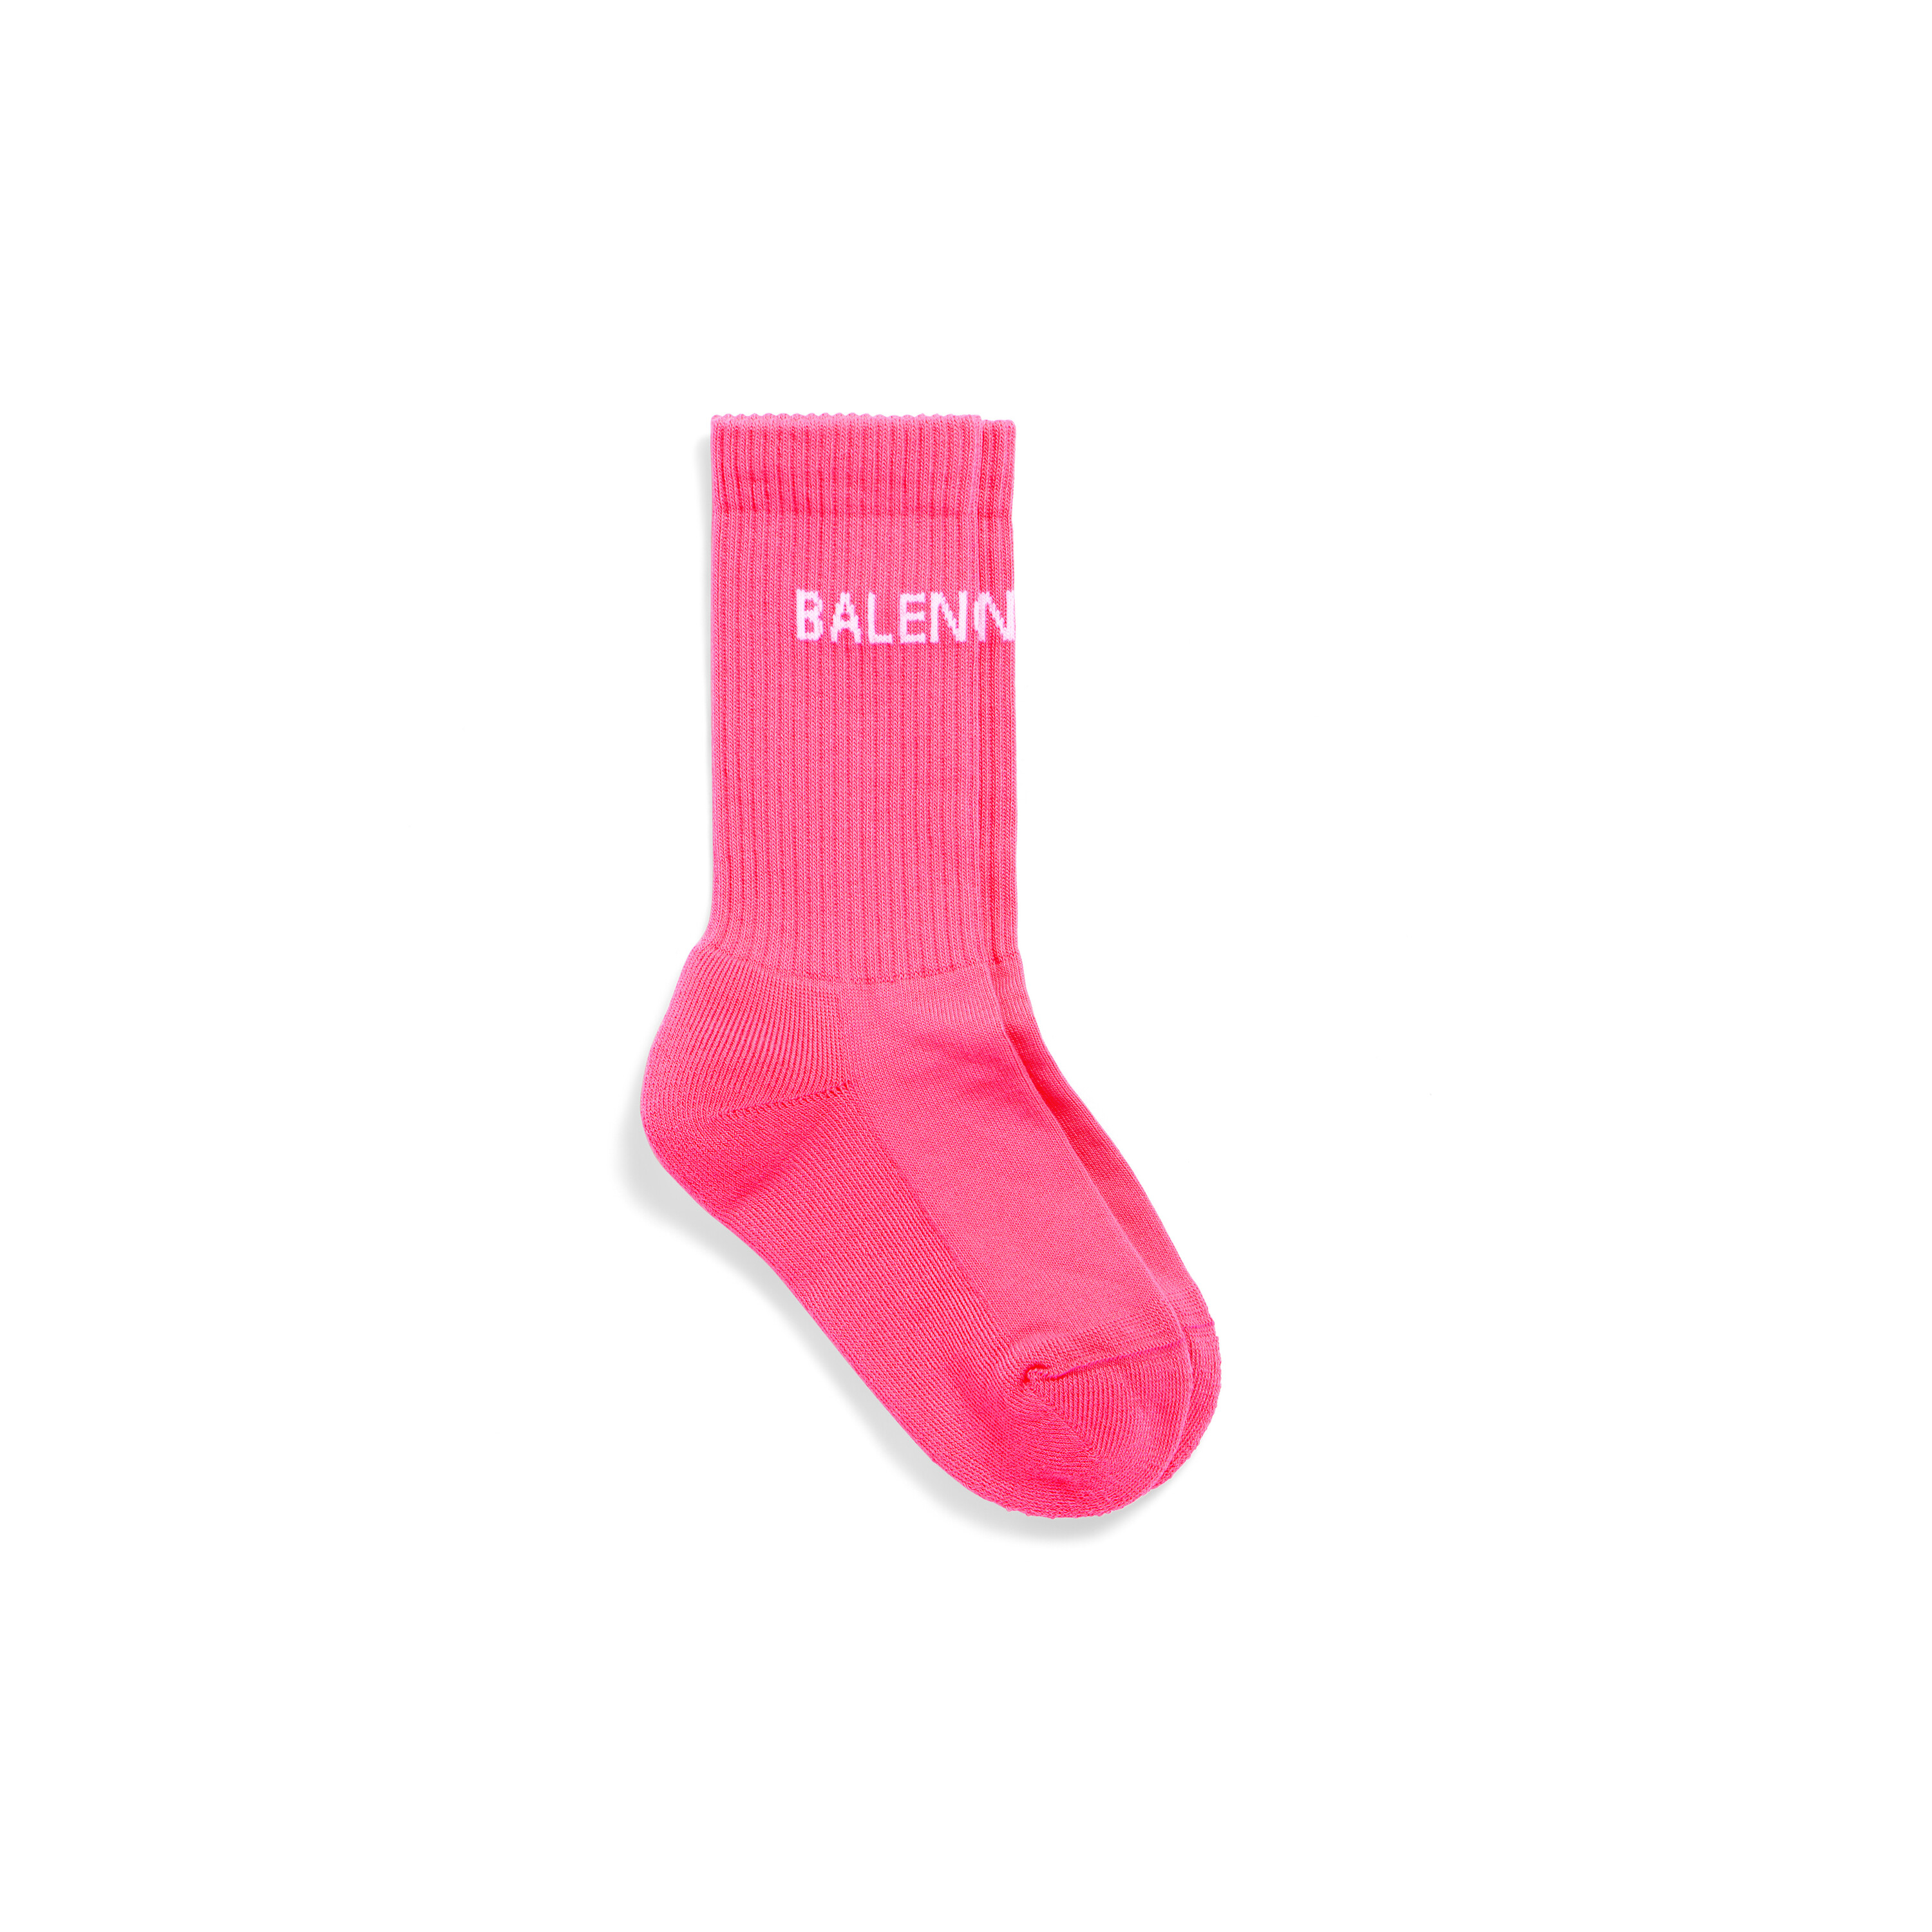 BALENCIAGA Speed LT sock sneakers  Pink  Balenciaga shoes 597425W2DBJ  online on GIGLIOCOM